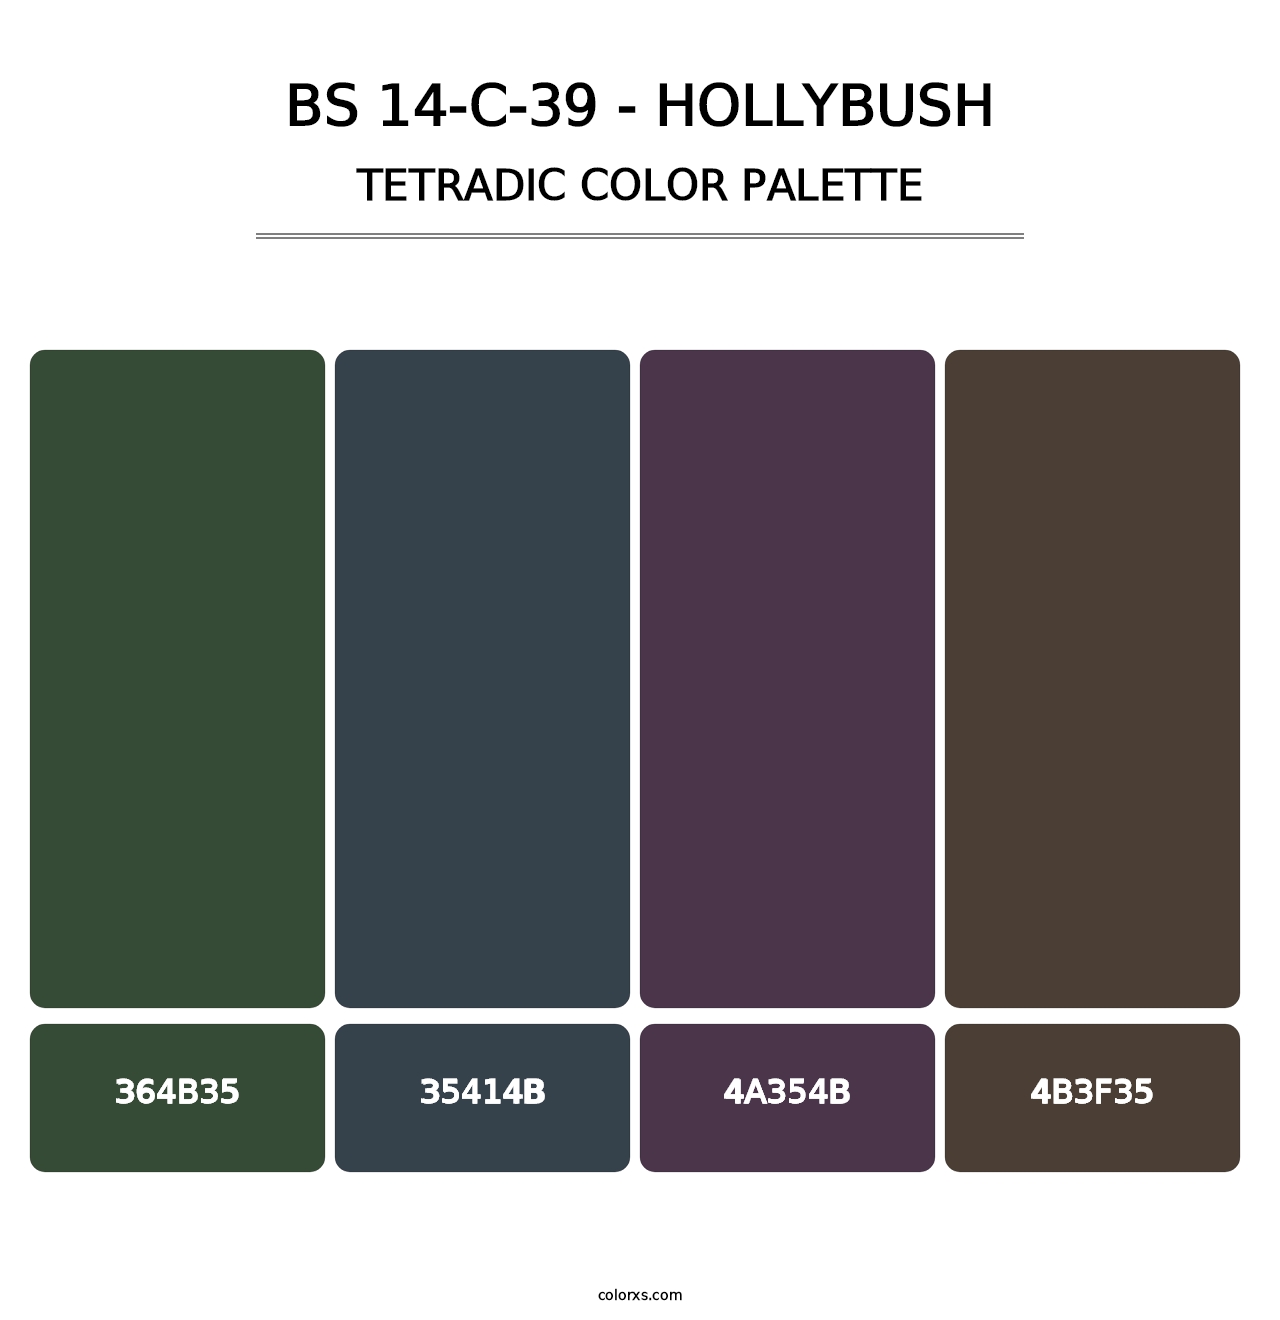 BS 14-C-39 - Hollybush - Tetradic Color Palette